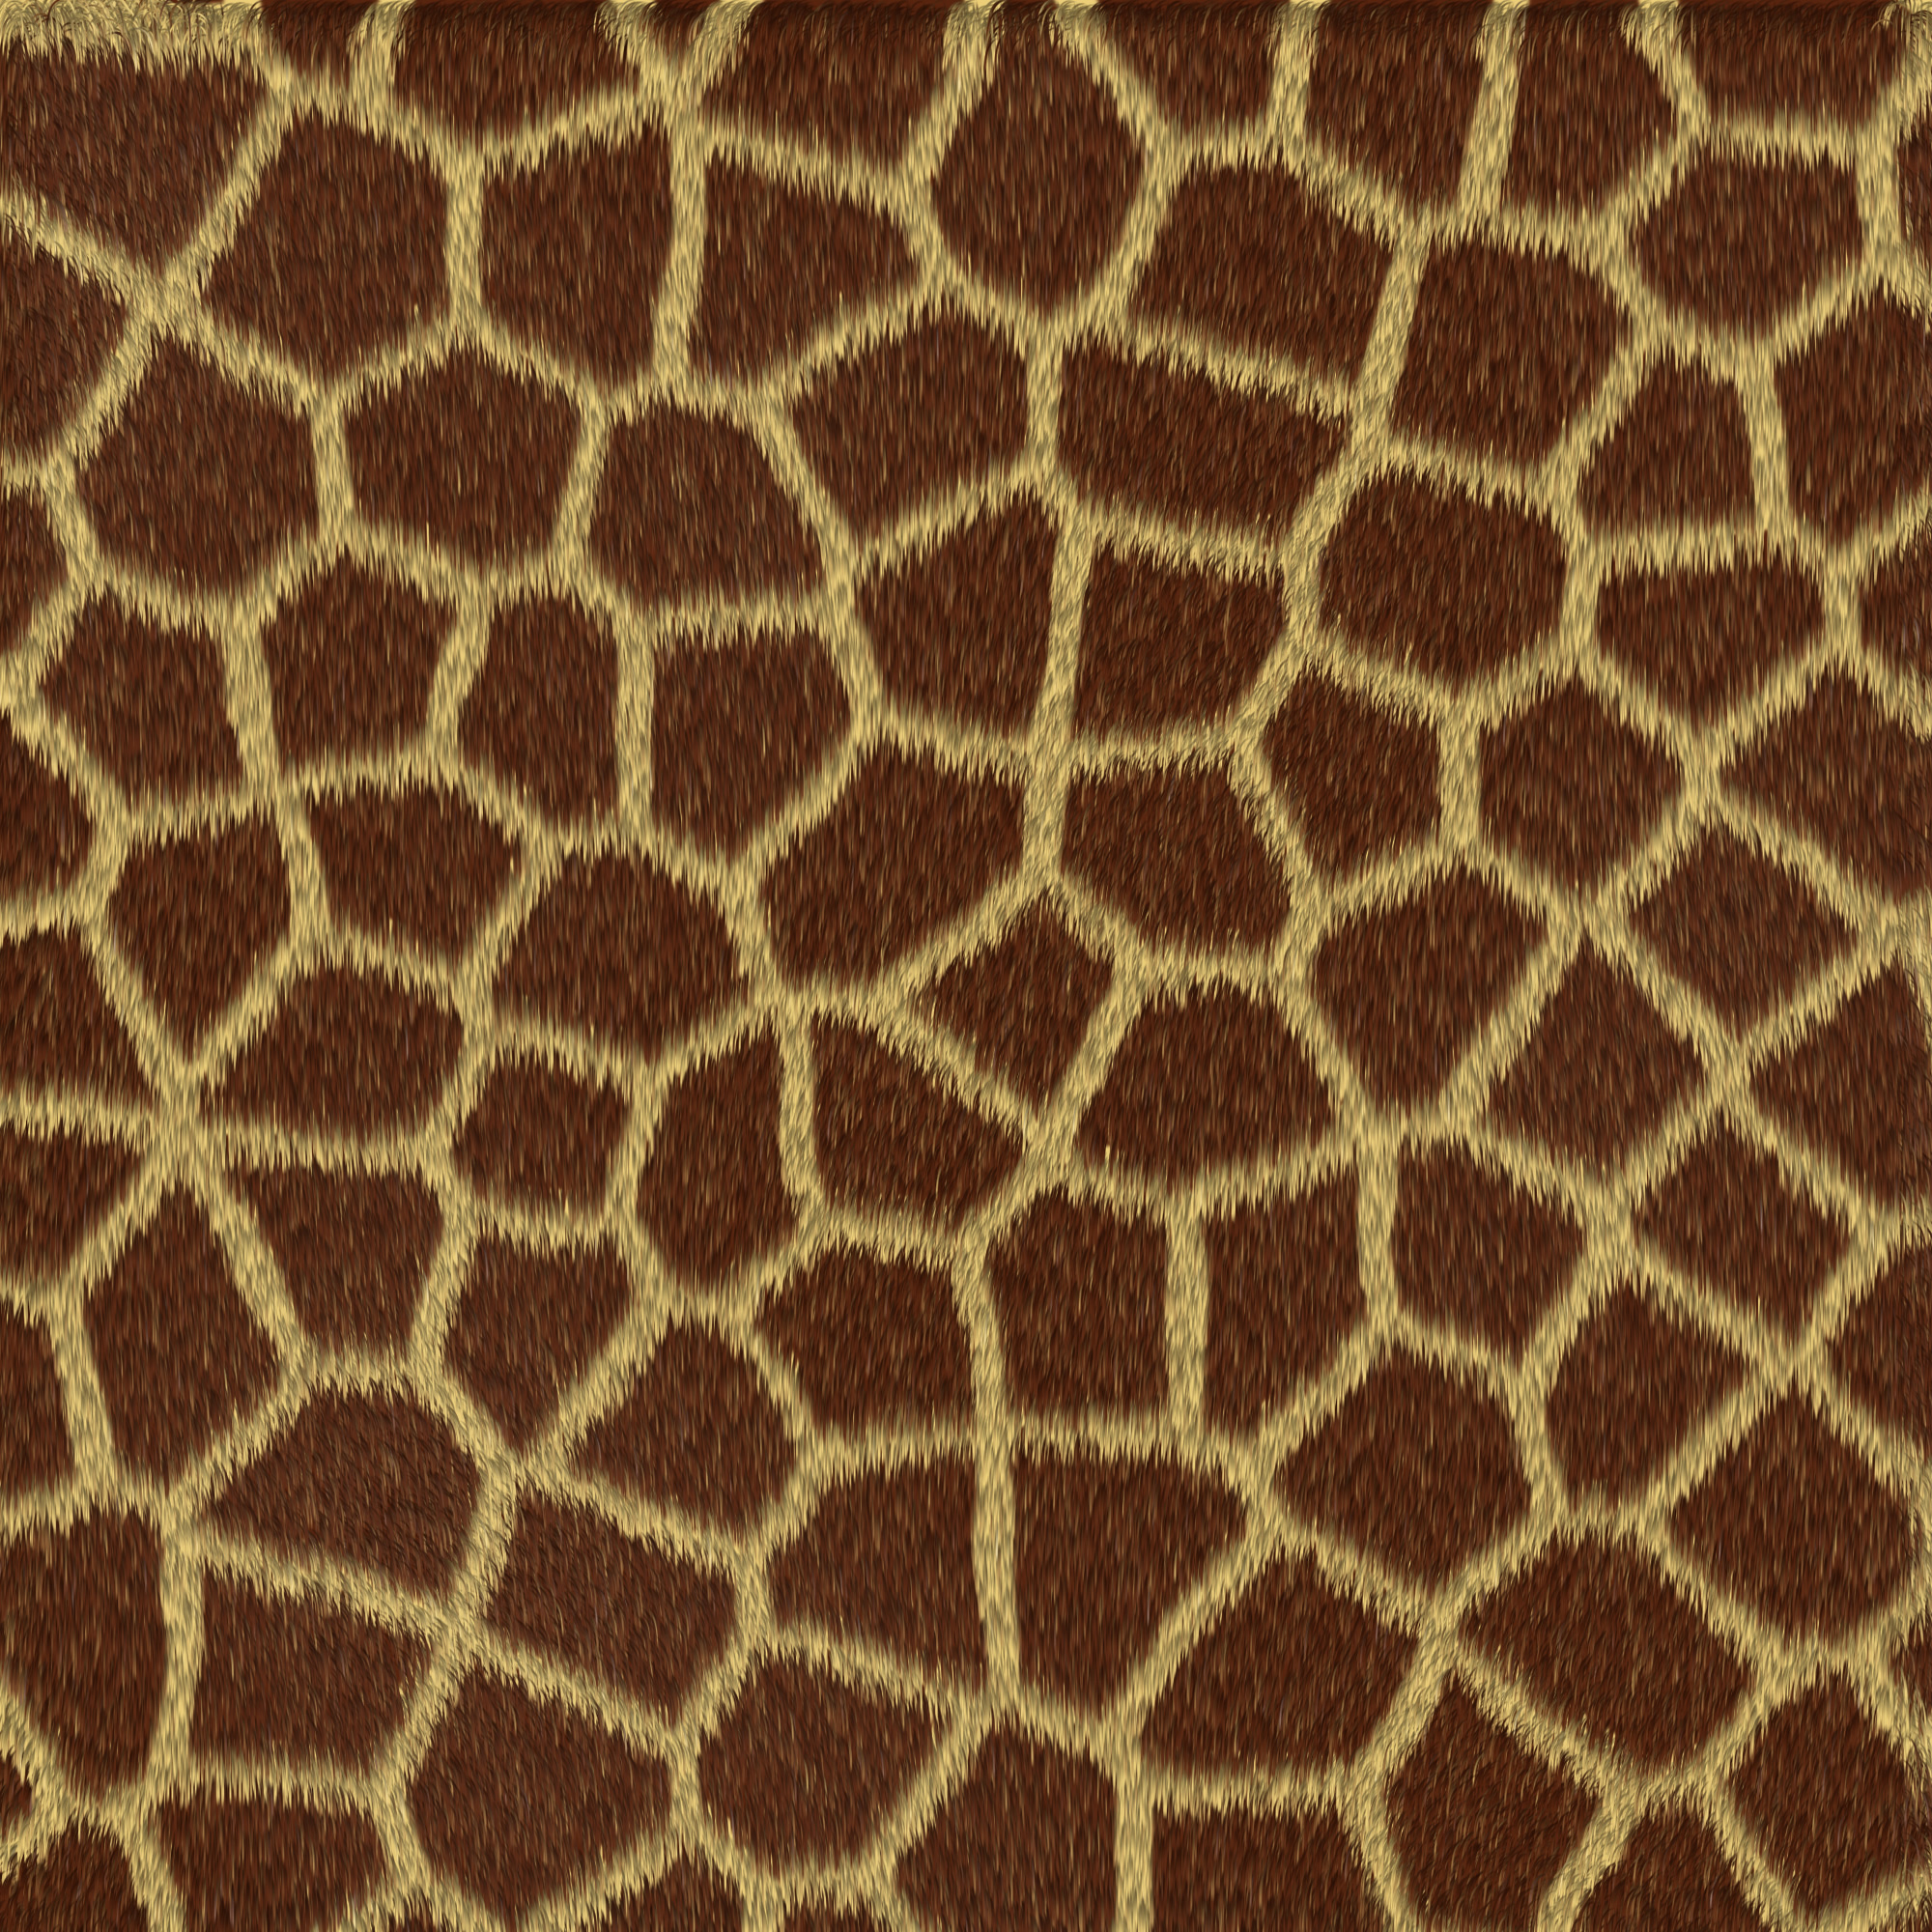 giraffe, skin giraffe, animal texture, background, skin animal texture, background